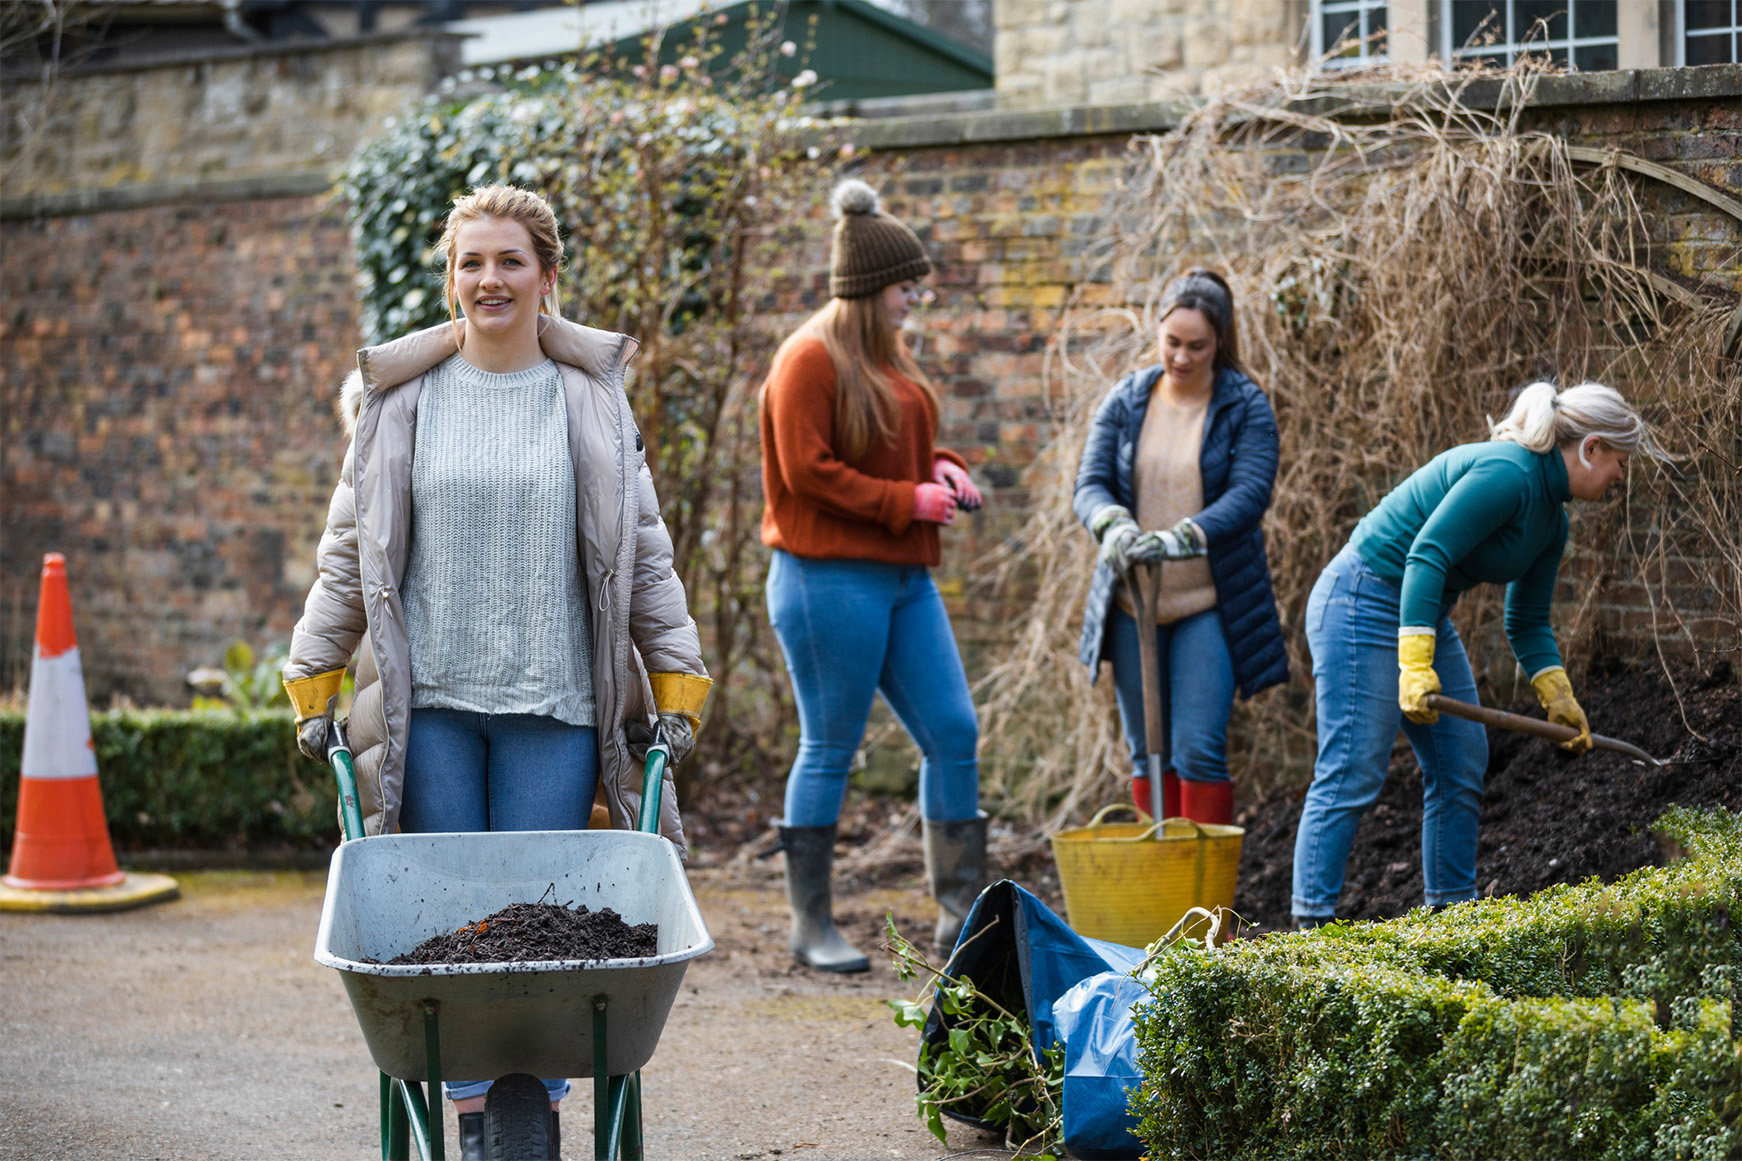 women gardening in the community